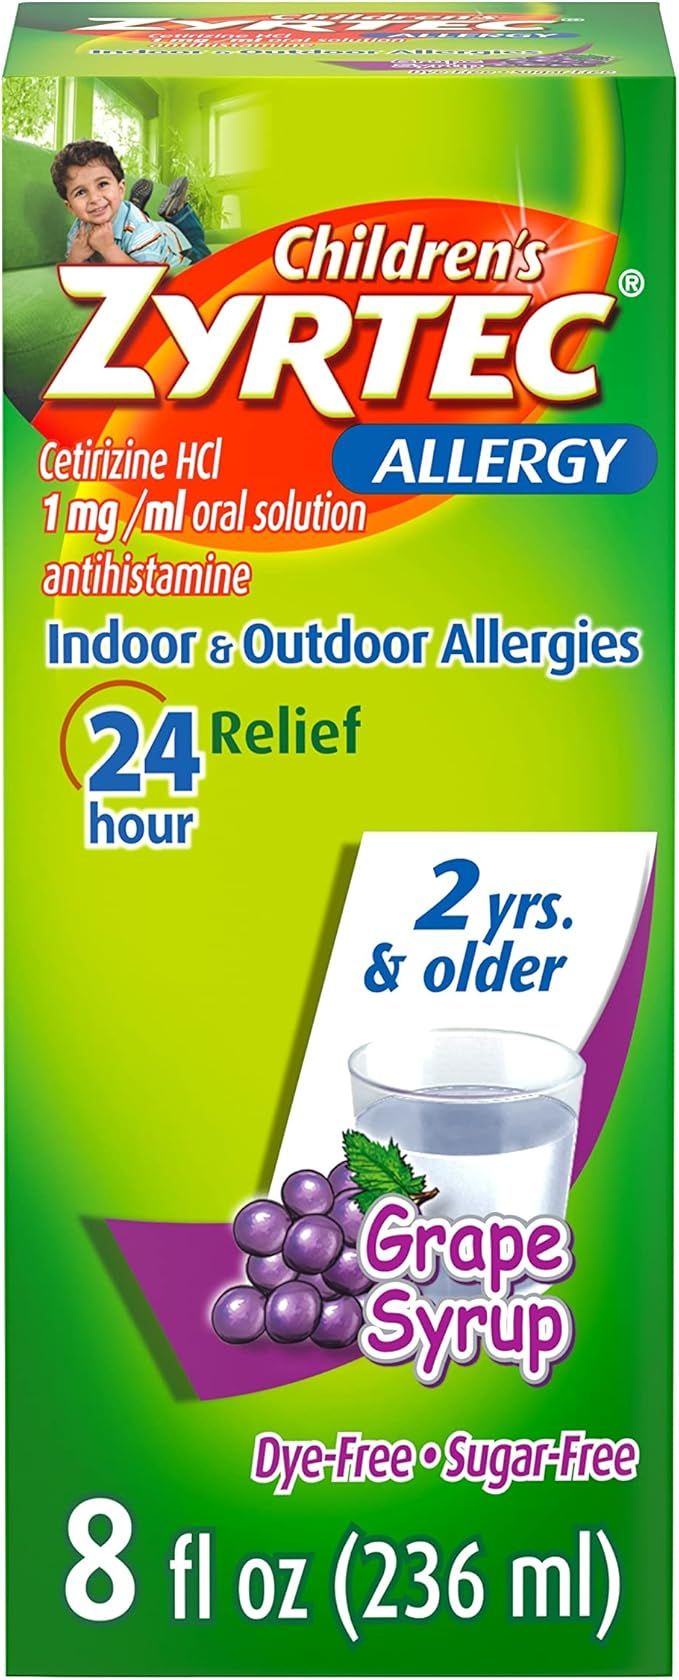 Zyrtec 24 Hour Children's Allergy Syrup with Cetirizine HCl, Antihistamine Allergy Medicine for I... | Amazon (US)